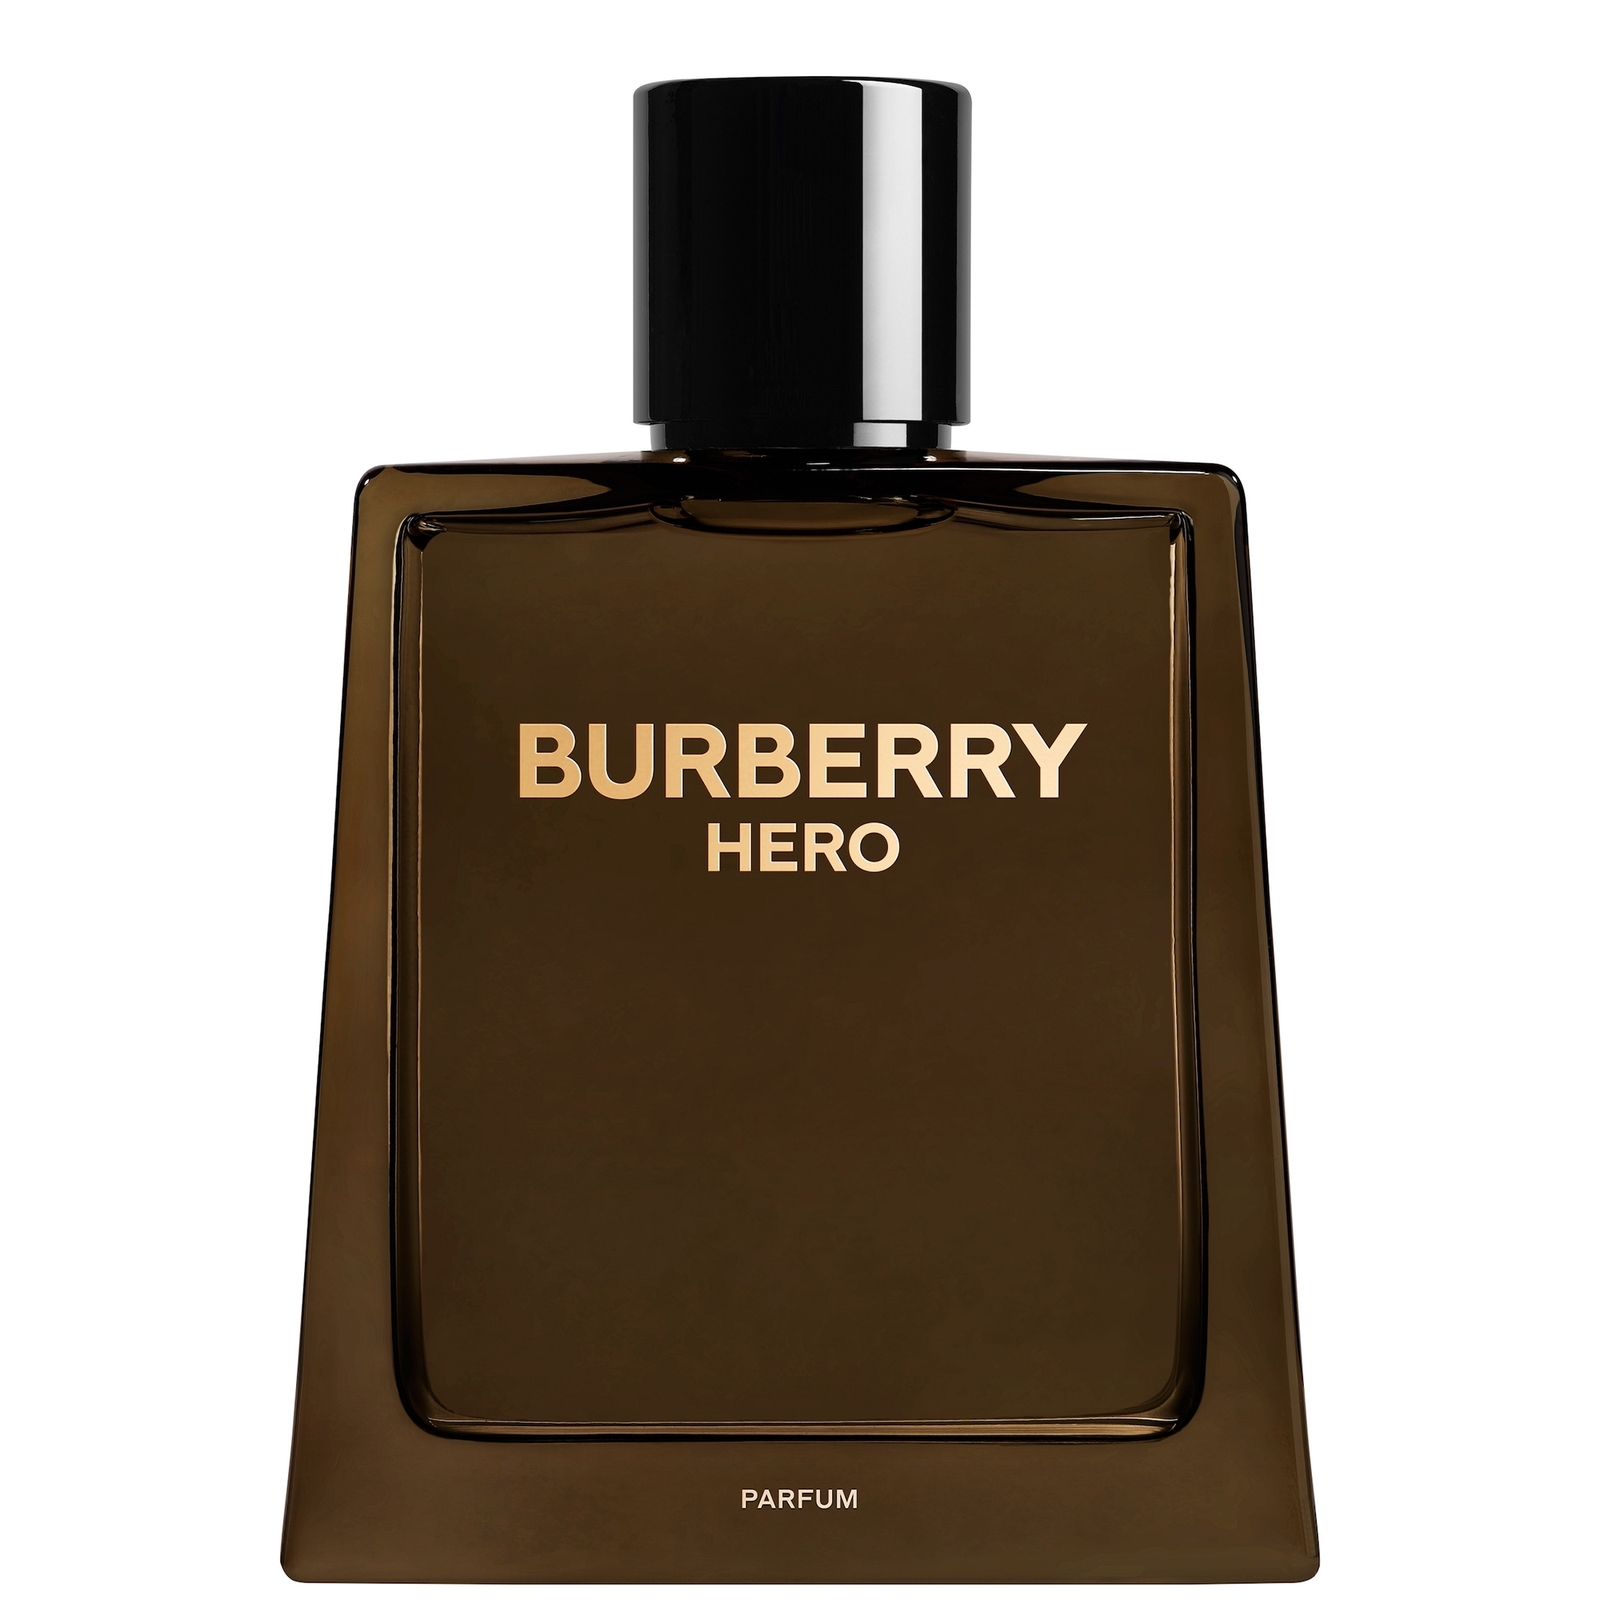 Photos - Women's Fragrance Burberry Hero Parfum for Men 150ml 99350178738 